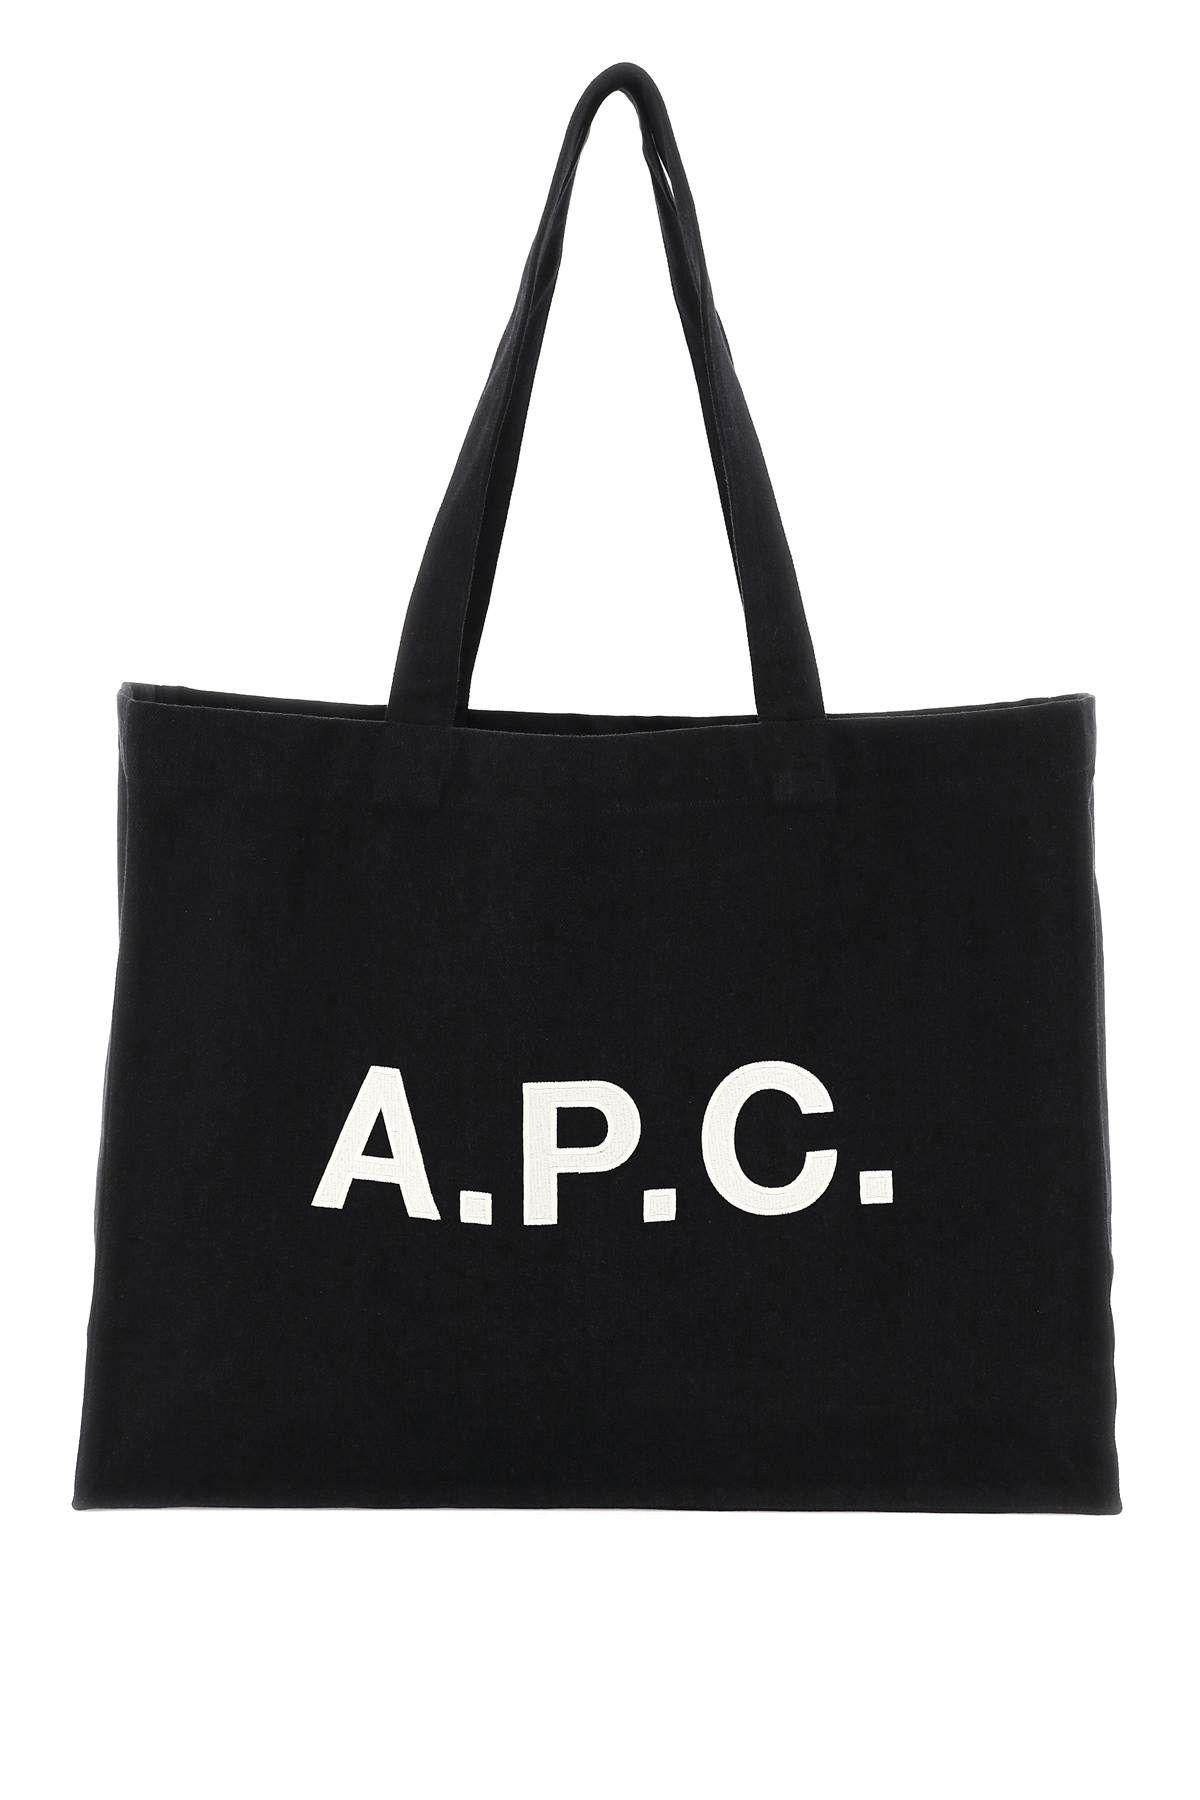 A.P.C. diane Tote Bag